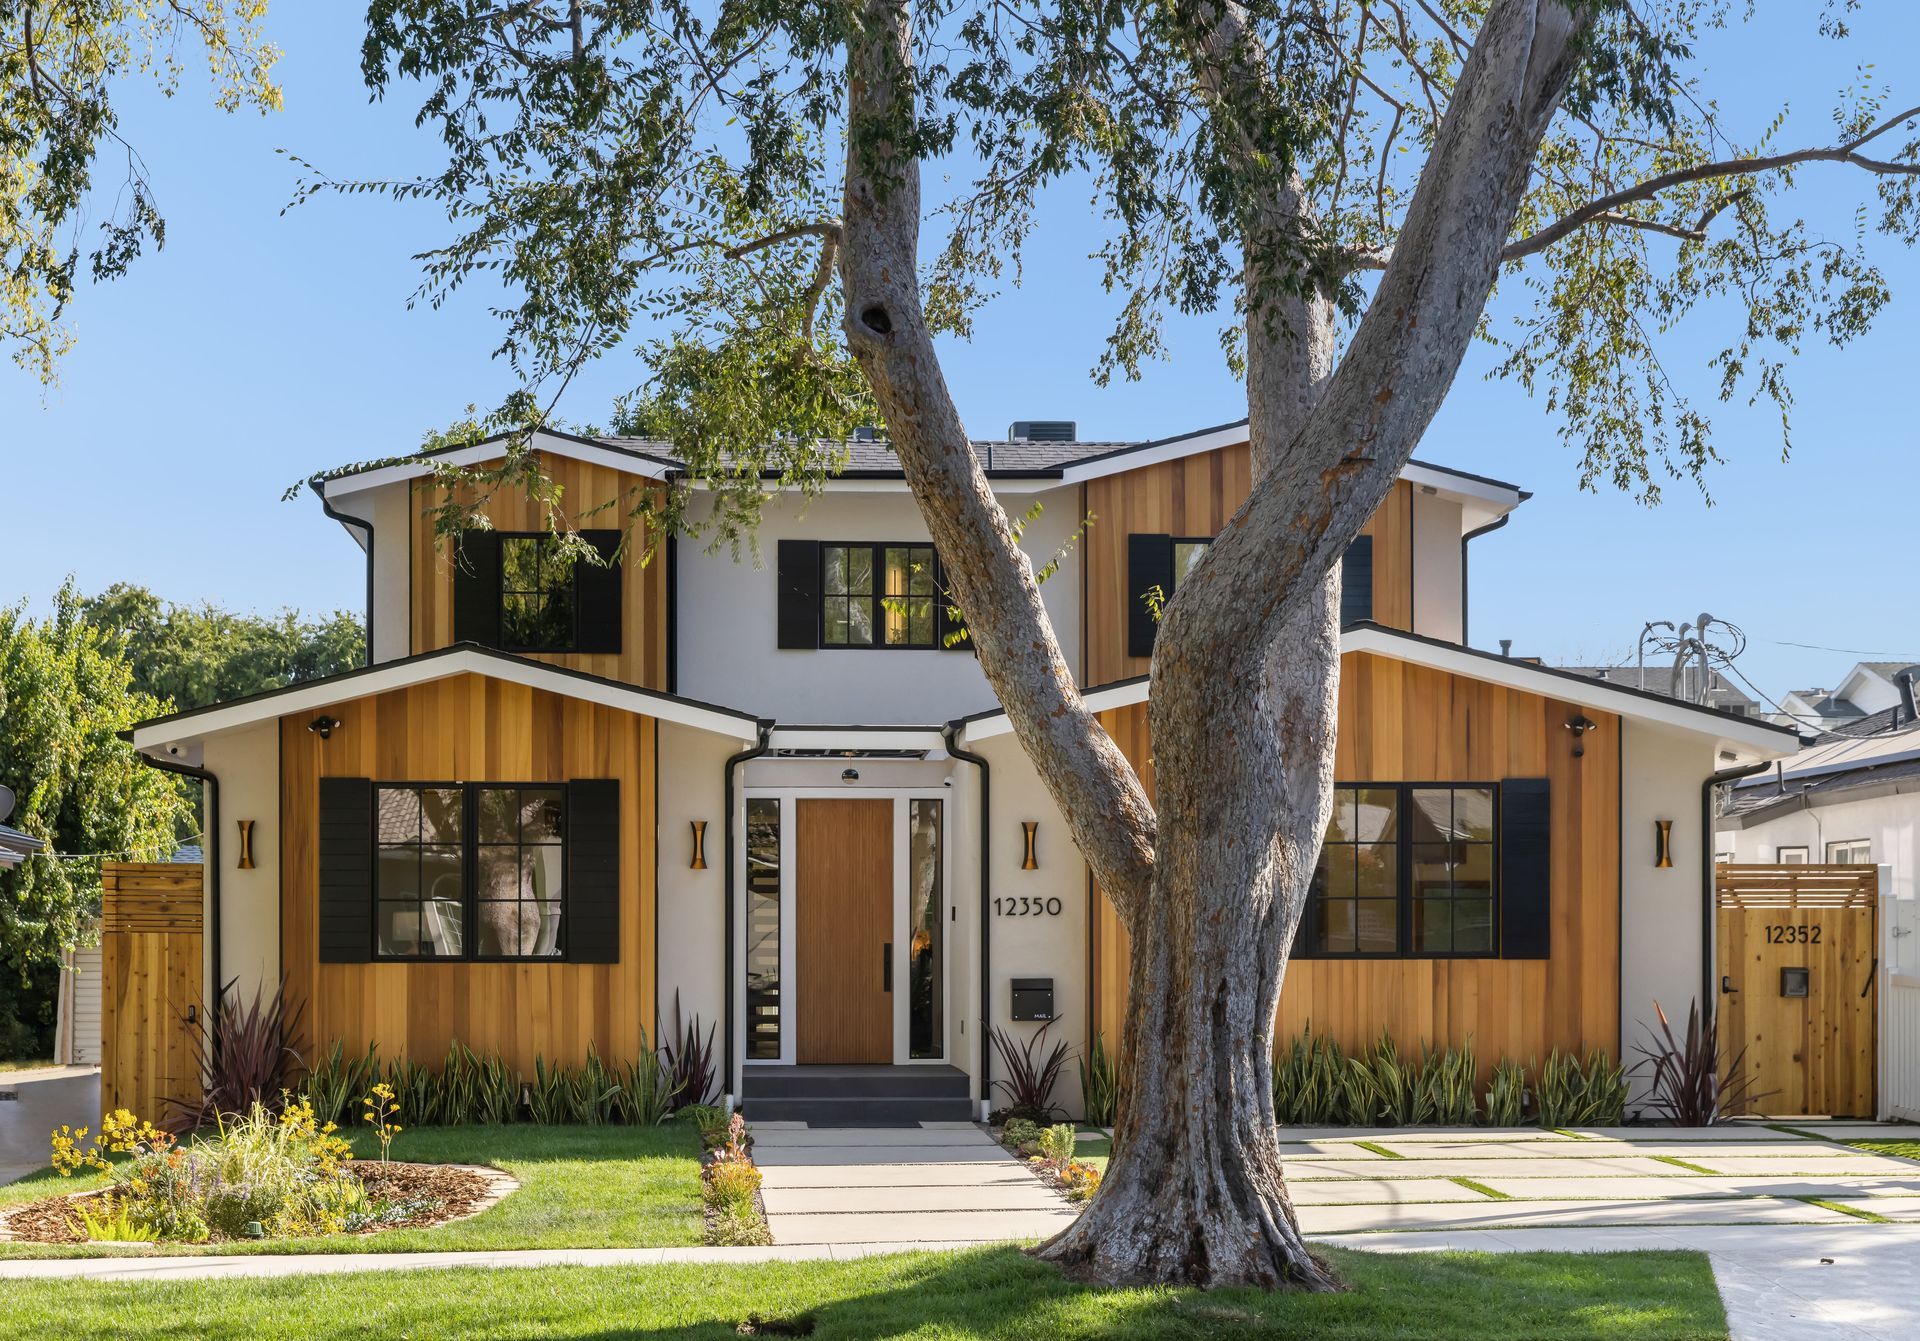 sherman oaks home for sale